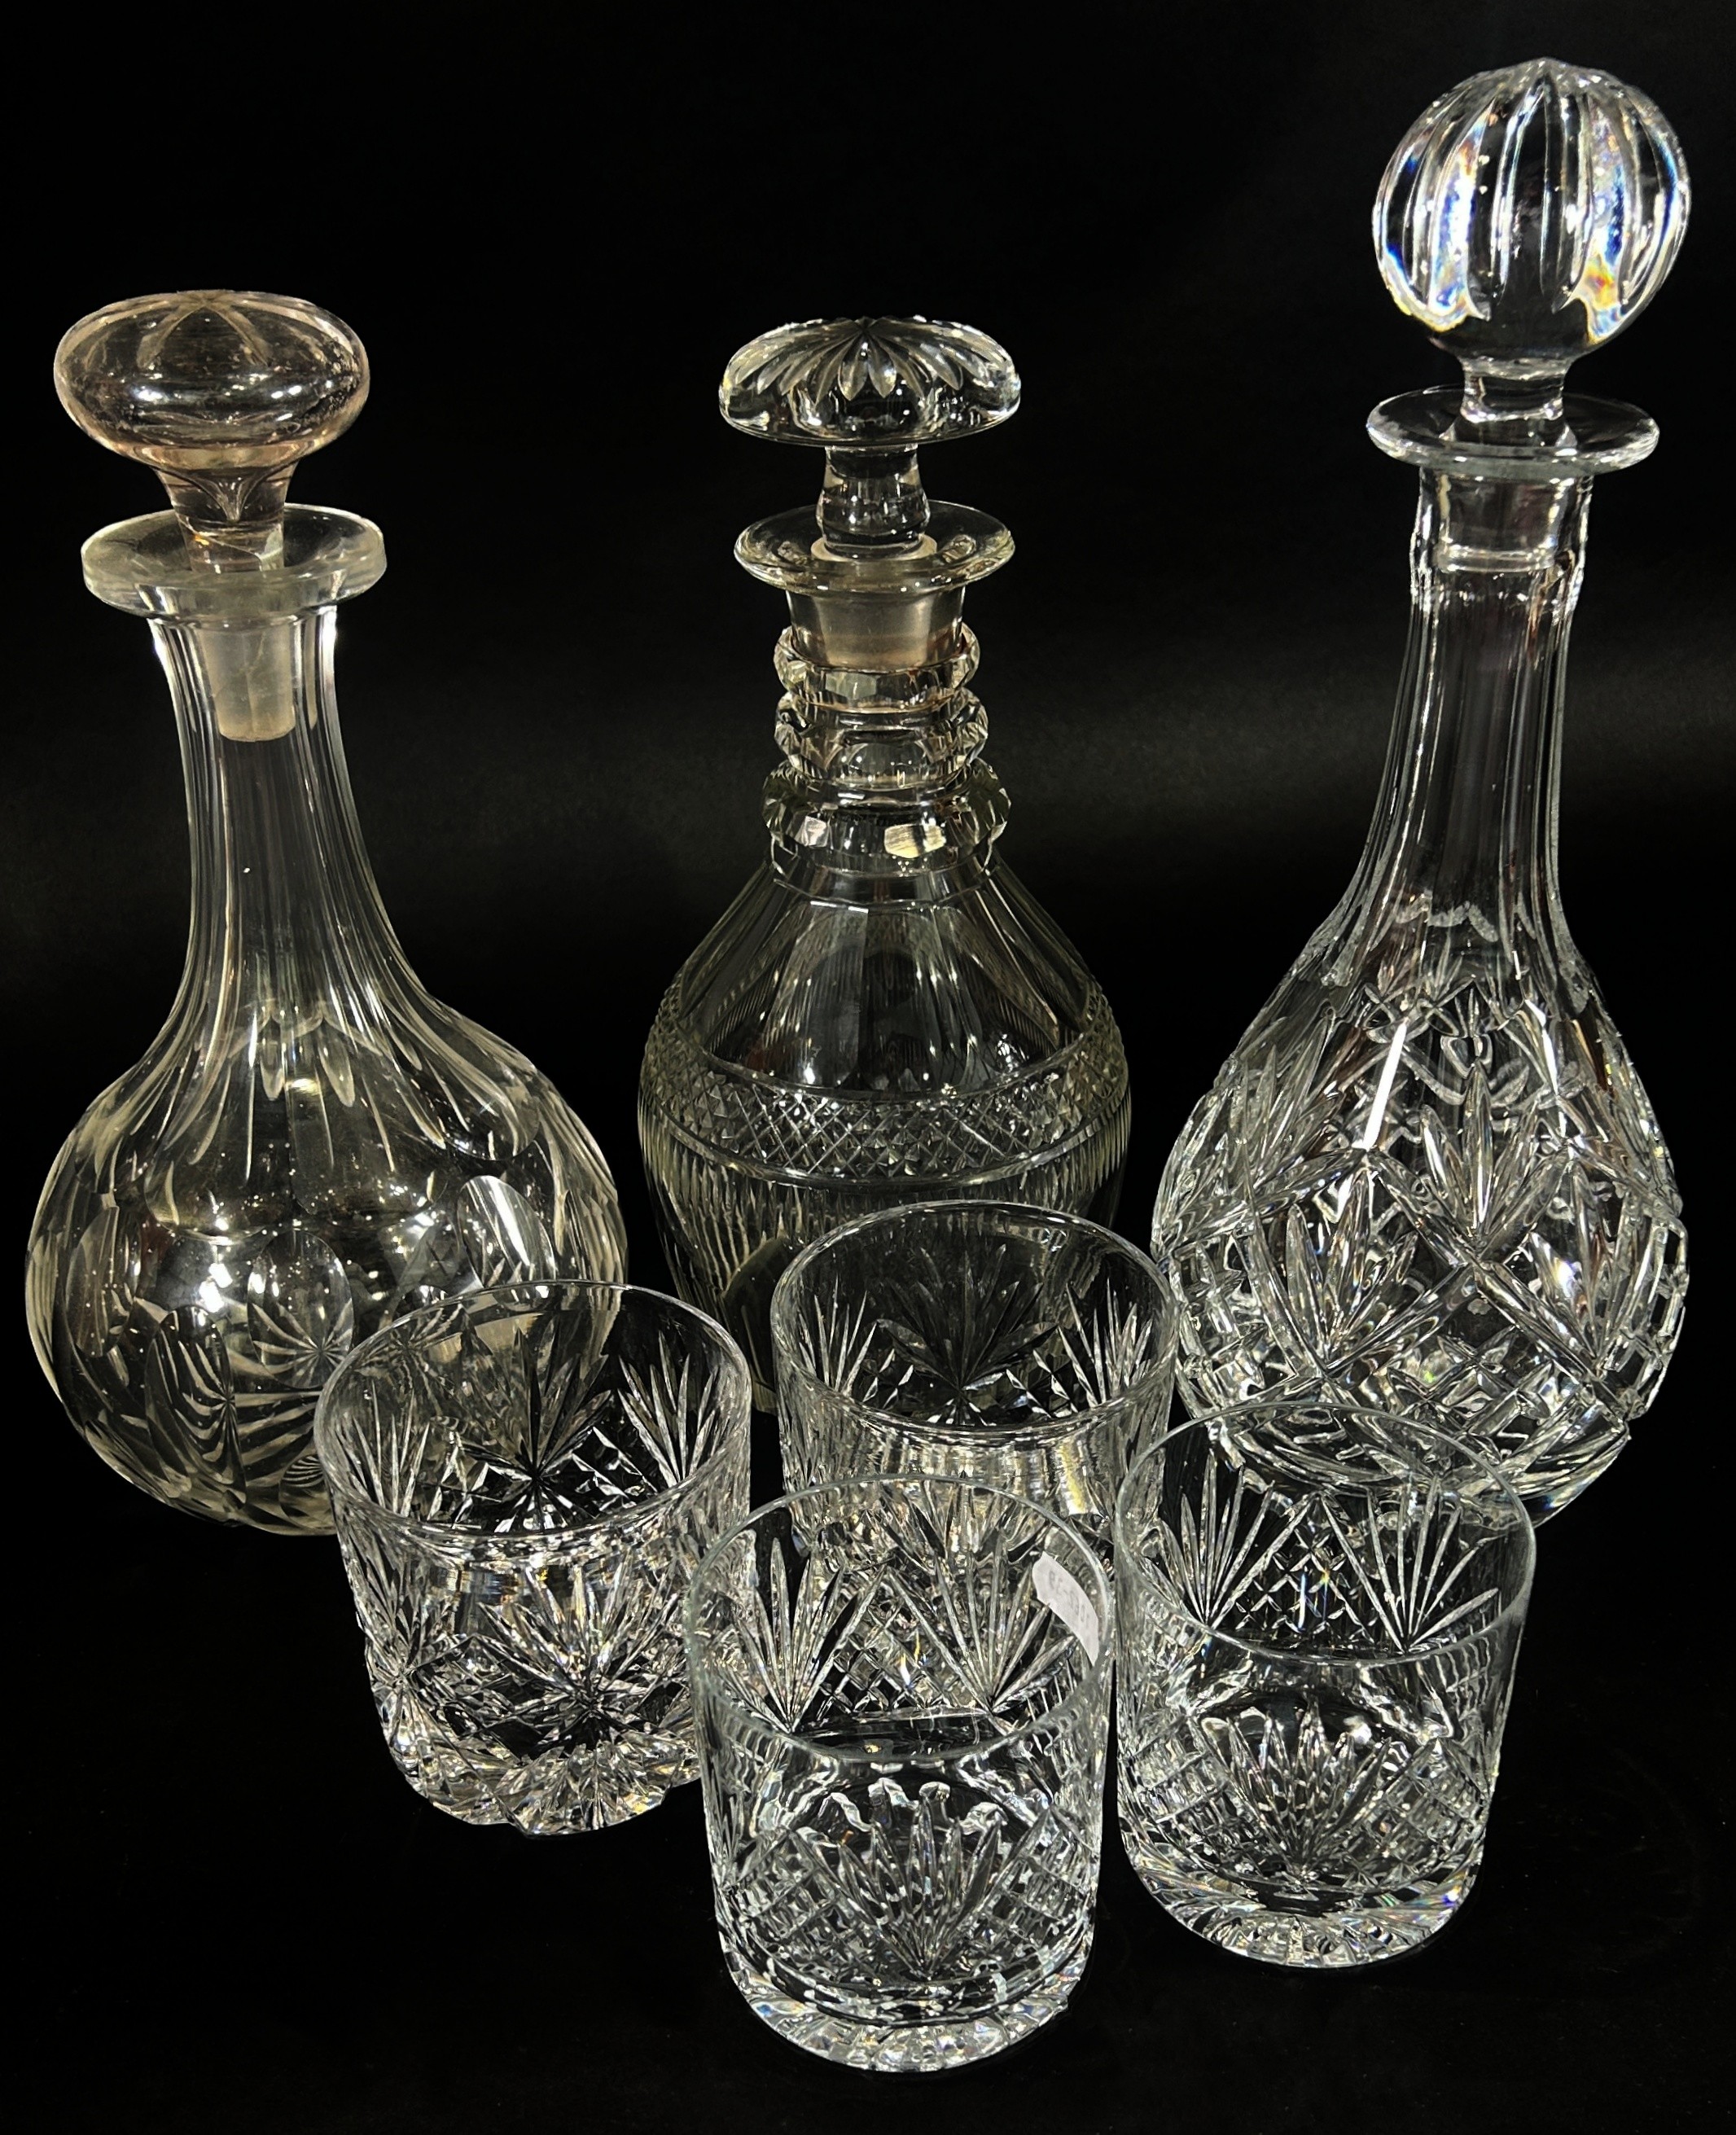 A decorative campana shaped glass vase with engraved fern decoration 29.5cm high x 29.5cm diameter